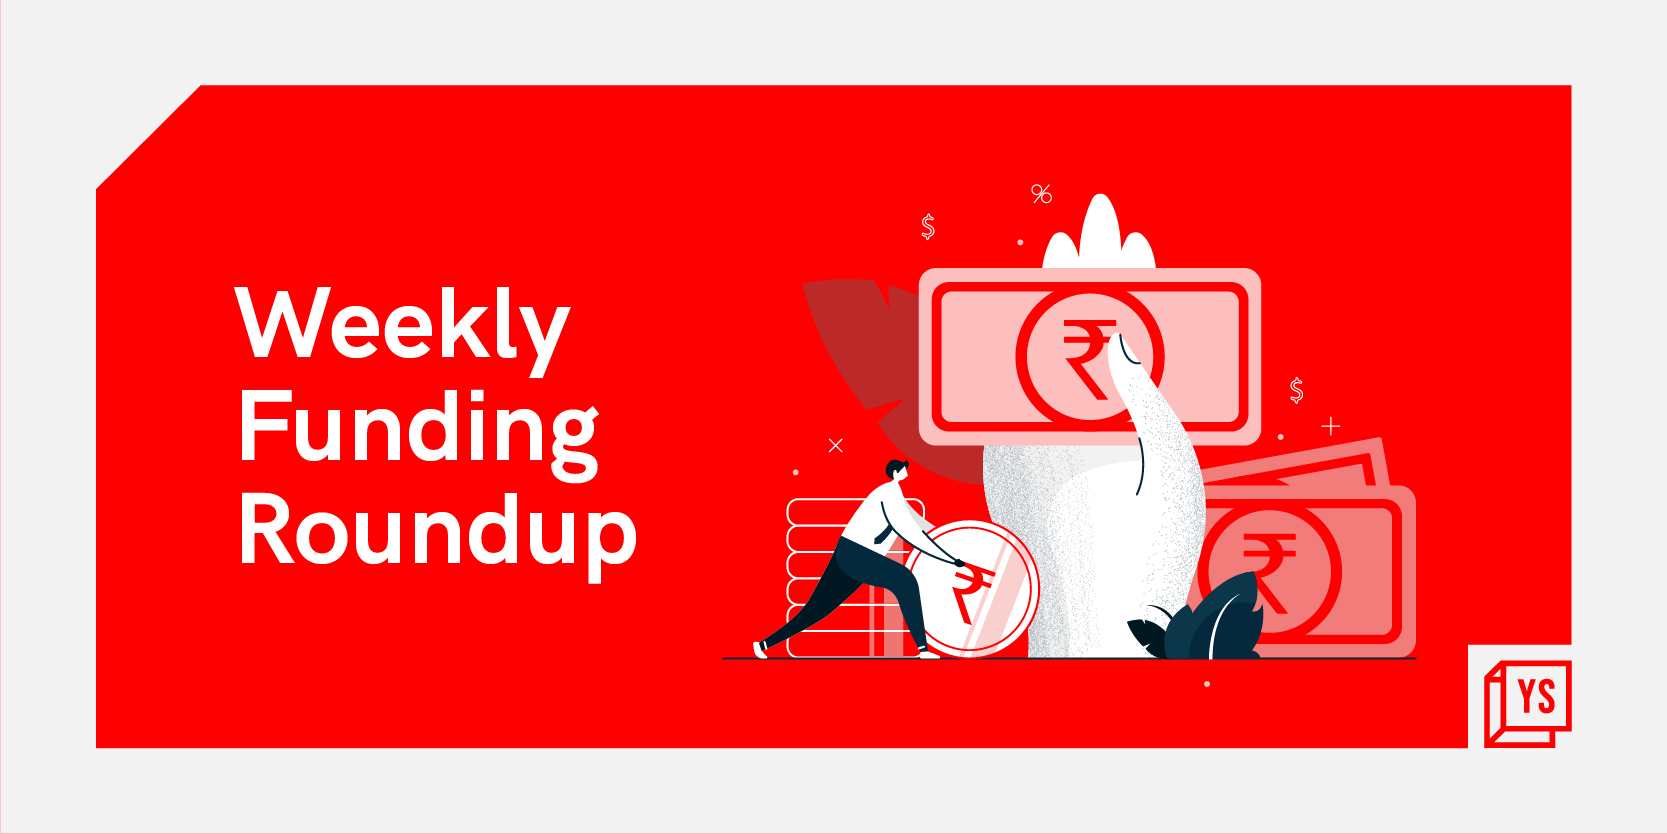 [Weekly funding roundup Aug 8-12] upGrad funding provides momentum

